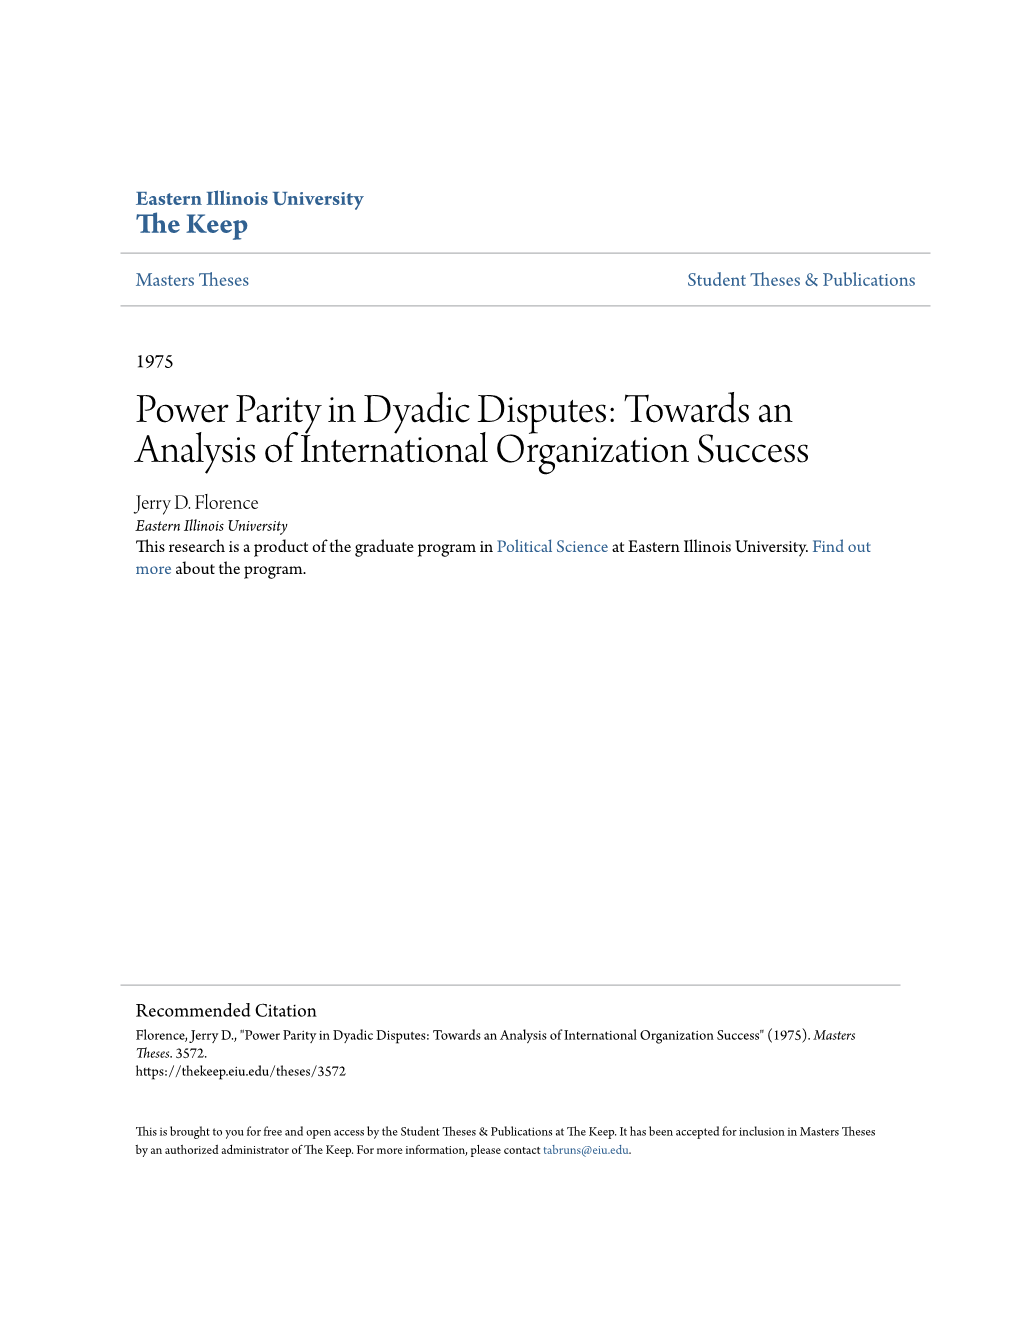 Power Parity in Dyadic Disputes: Towards an Analysis of International Organization Success Jerry D